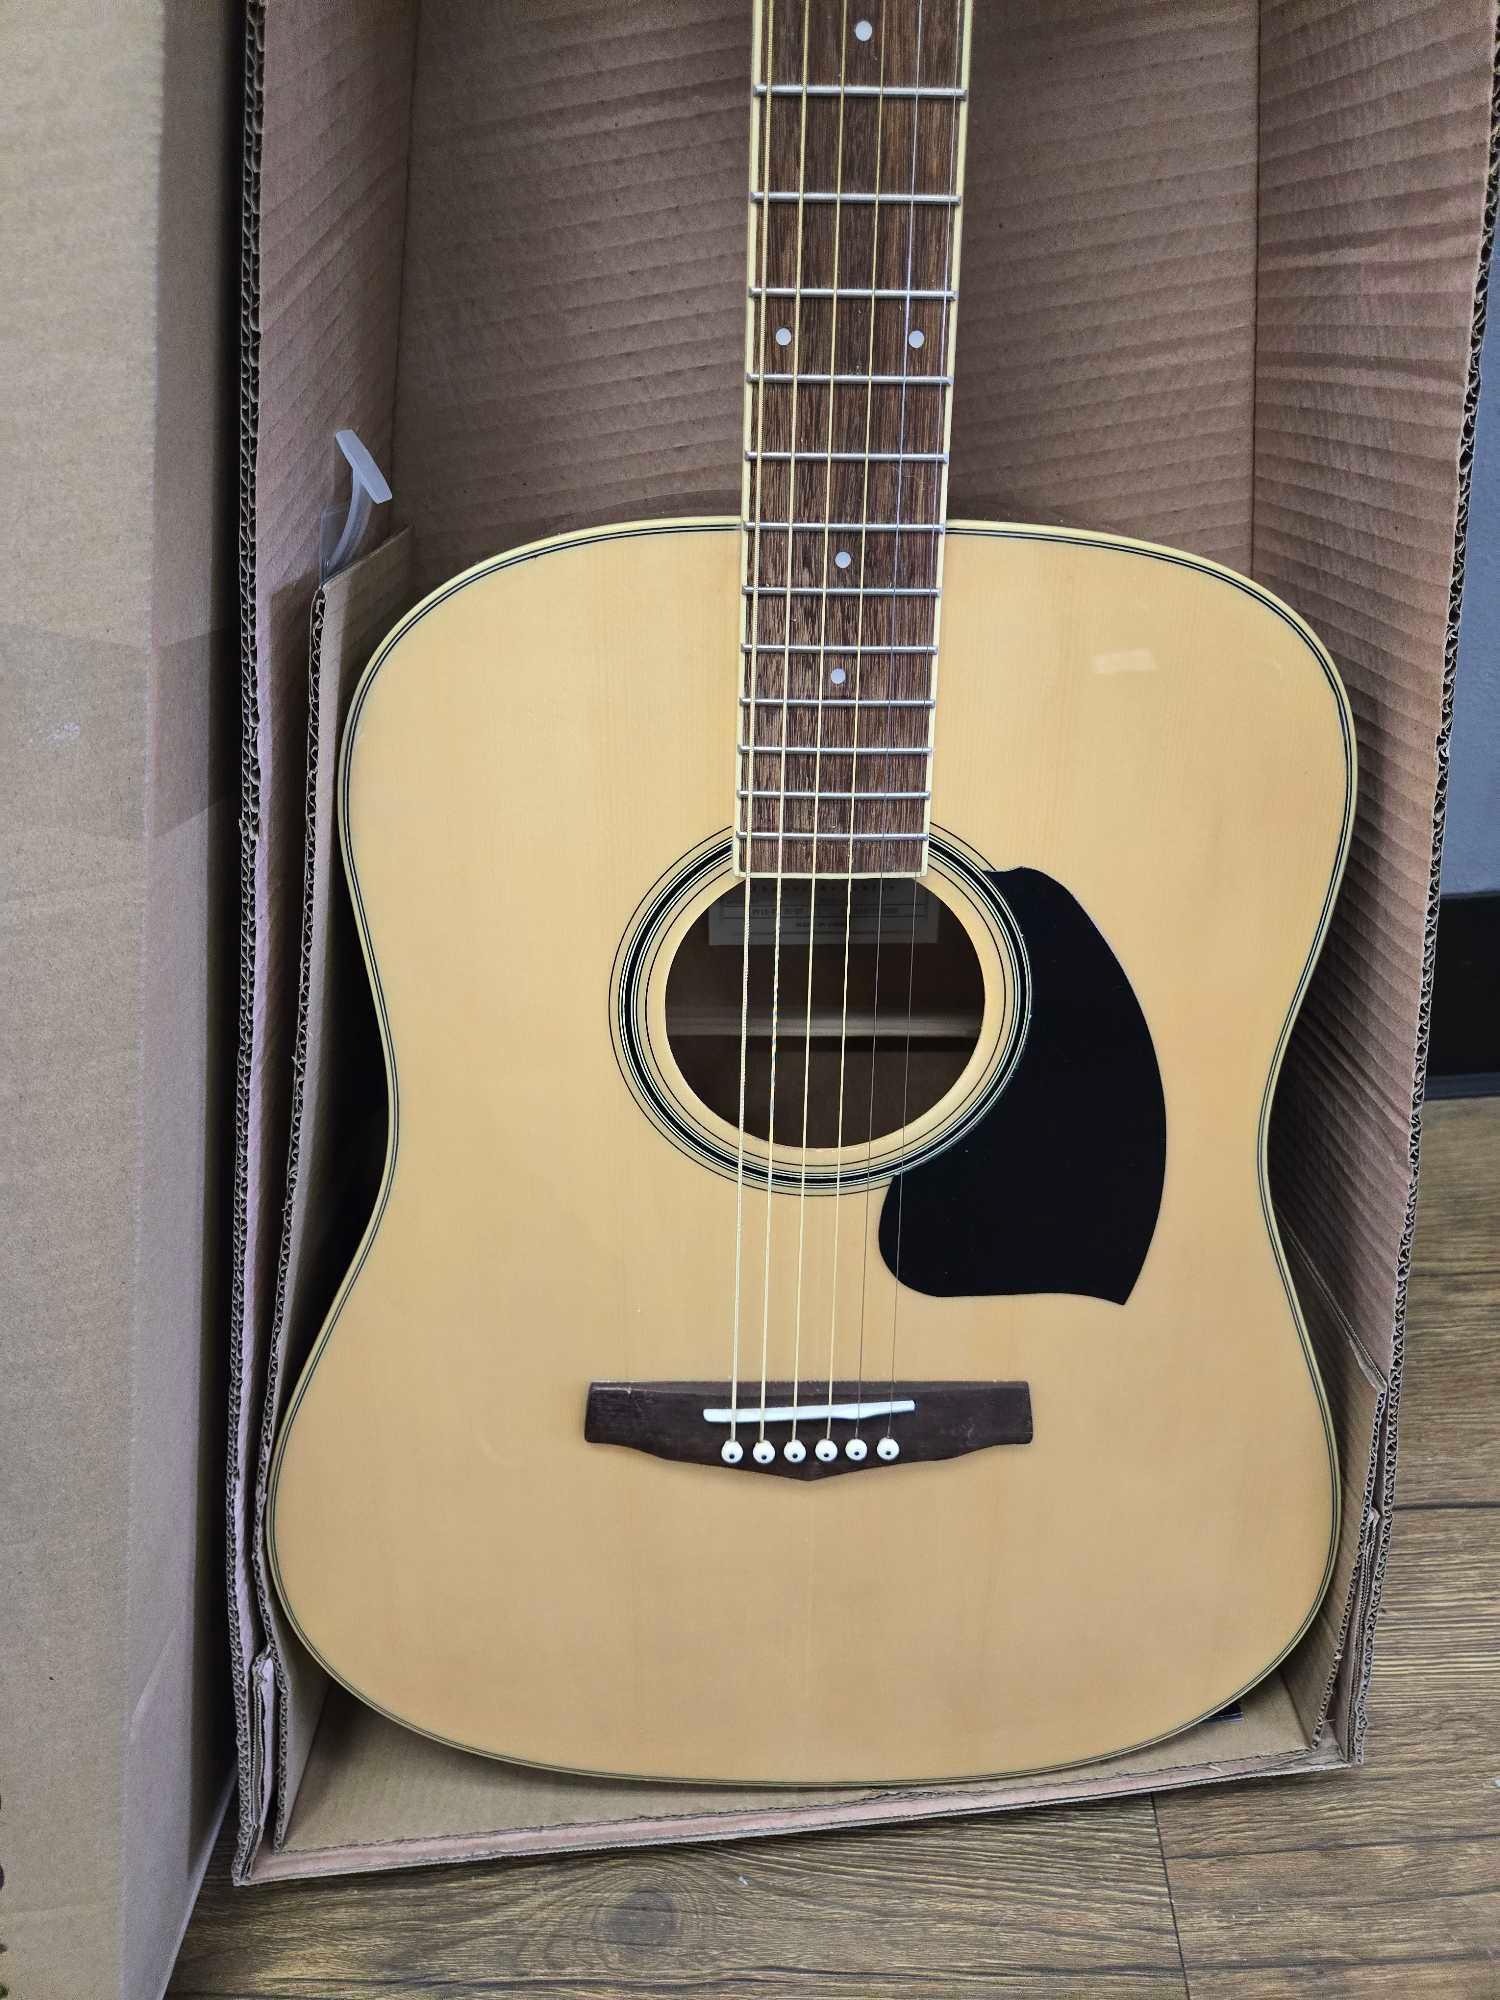 Ibanez Acoustic Guitar w/ Box